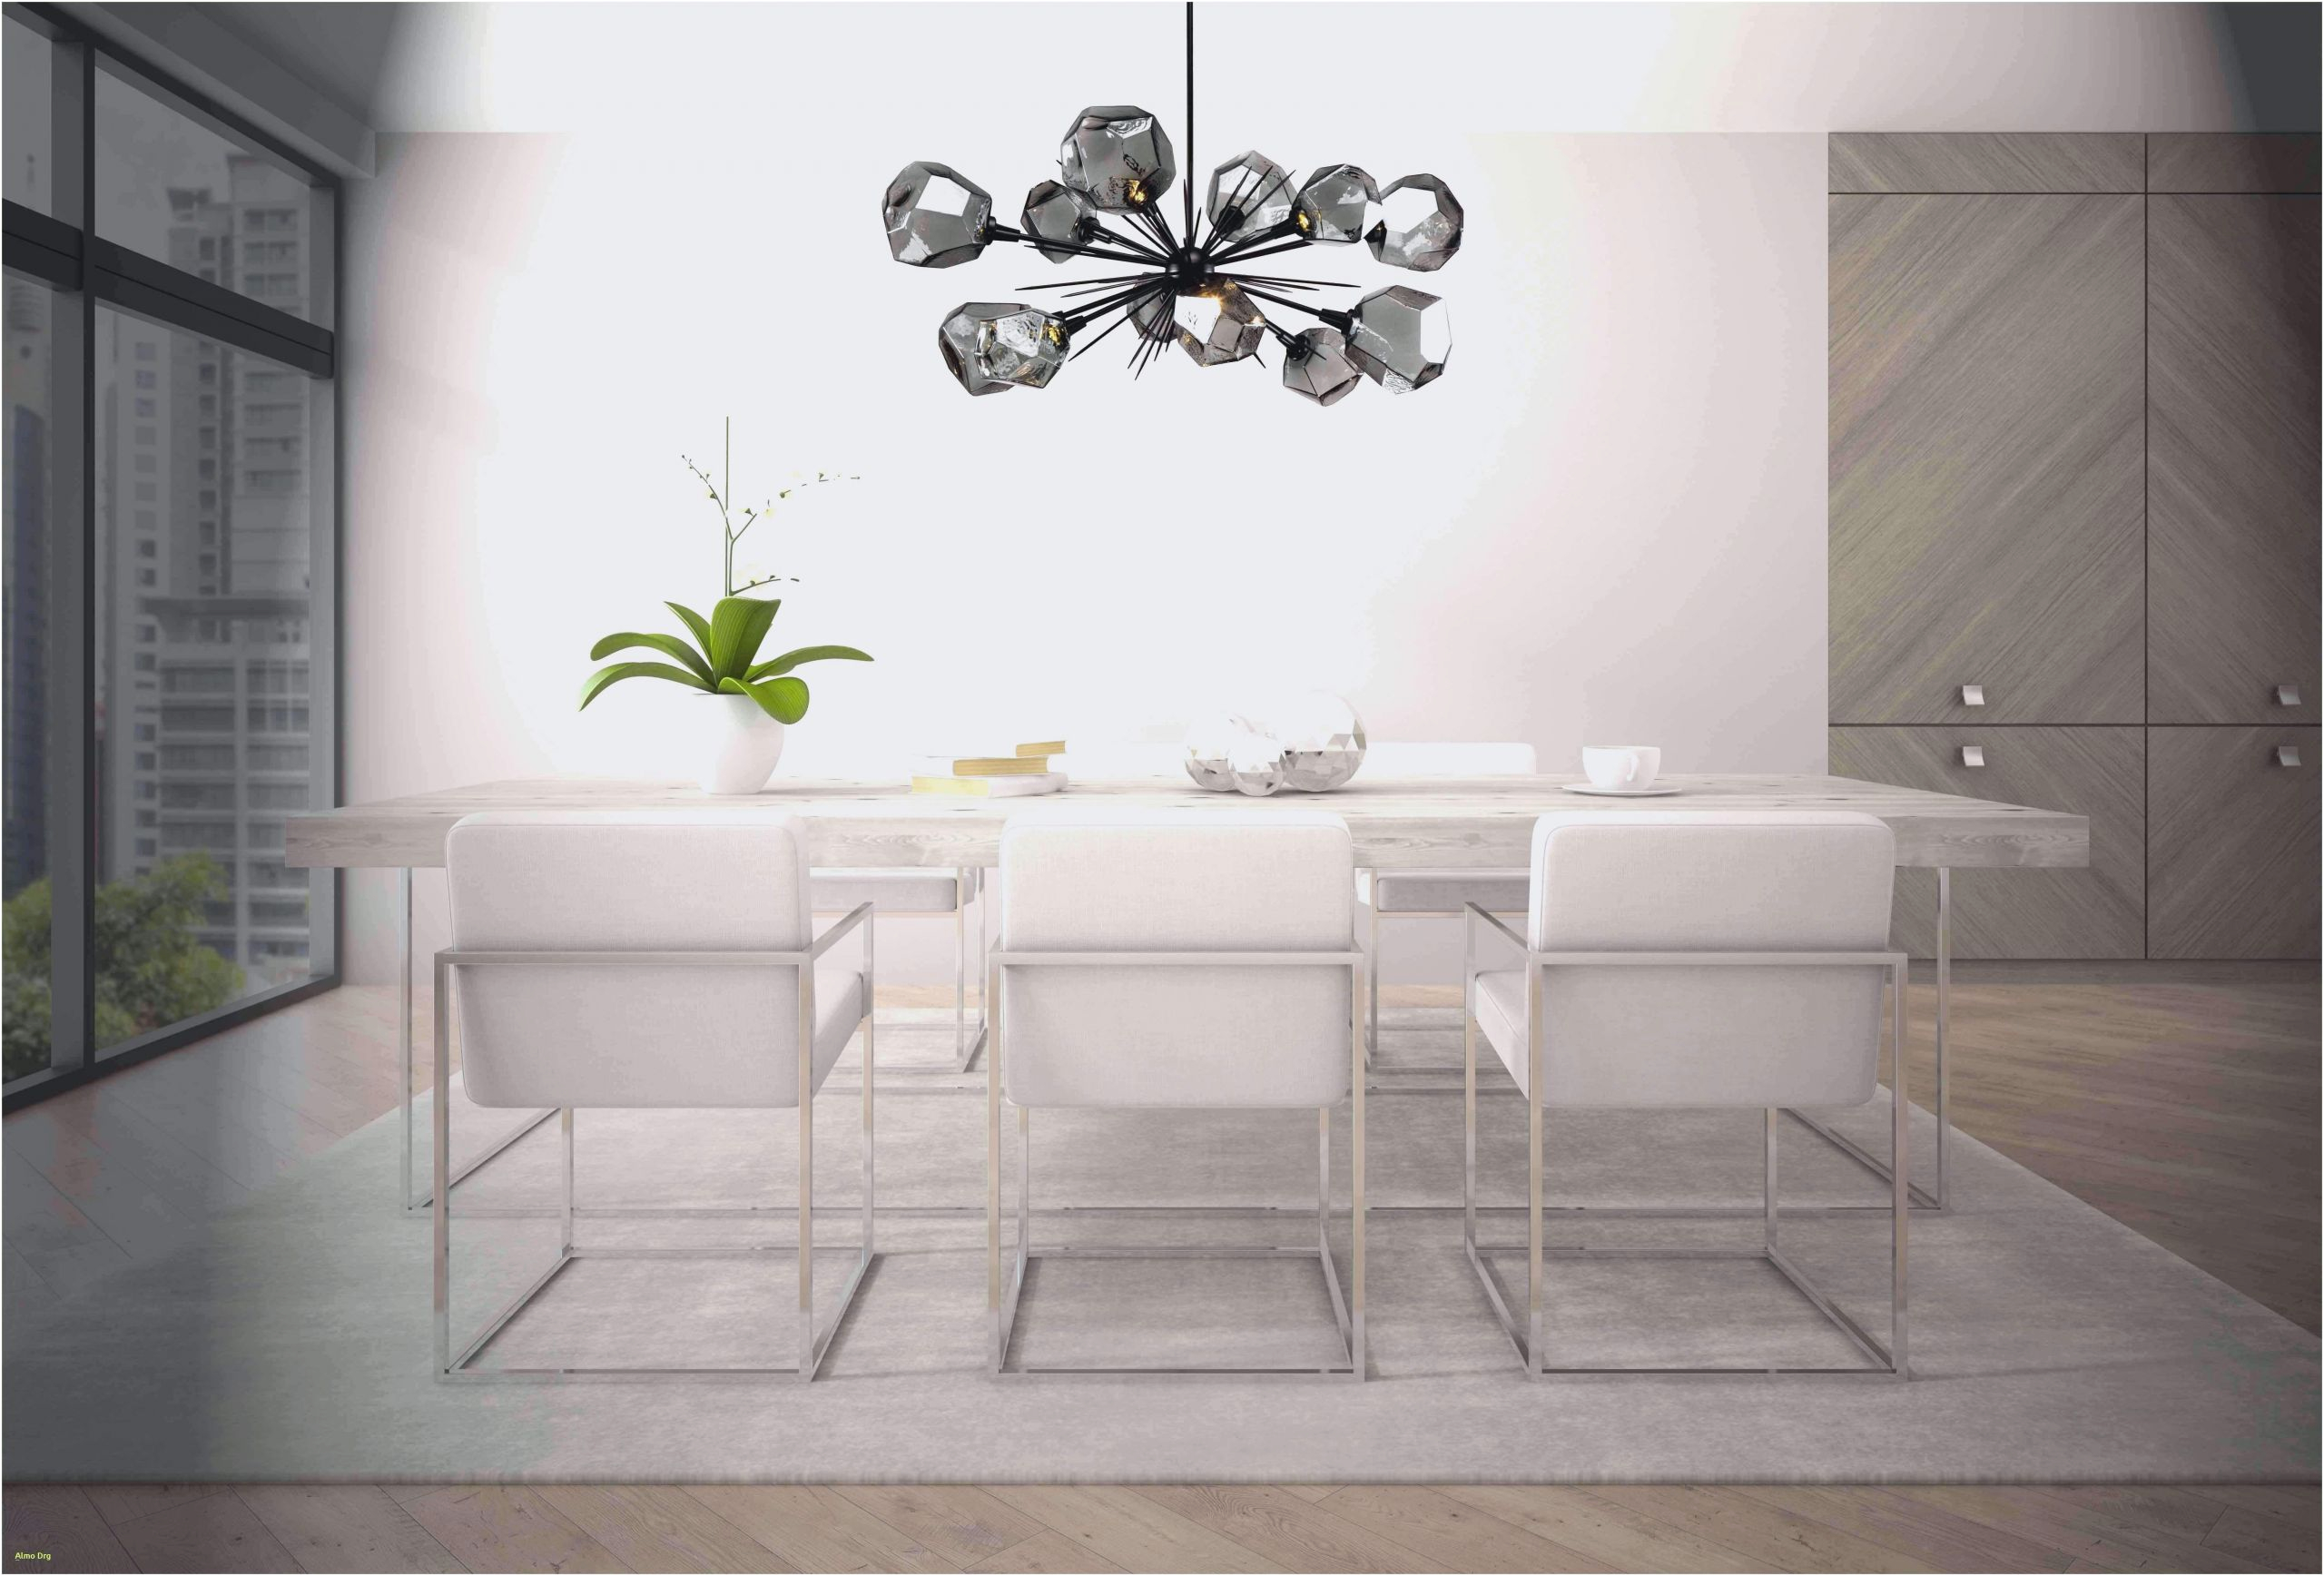 Design Badezimmer Beleuchtung Wohnzimmer Design Ideen Luxus Luxe Led Lampe Badezimmer